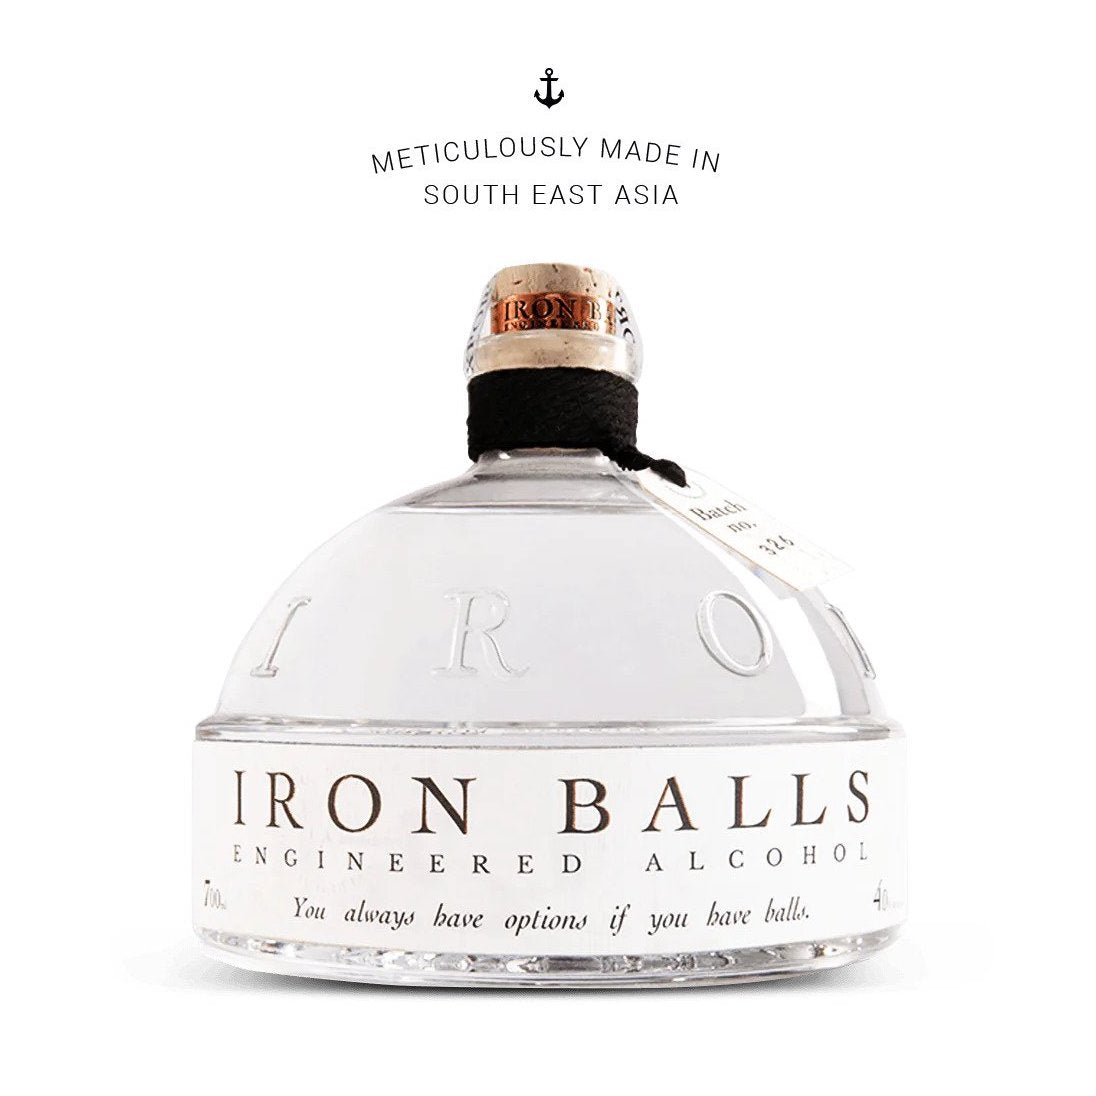 Iron Balls Gin engineered alcohol Bottle